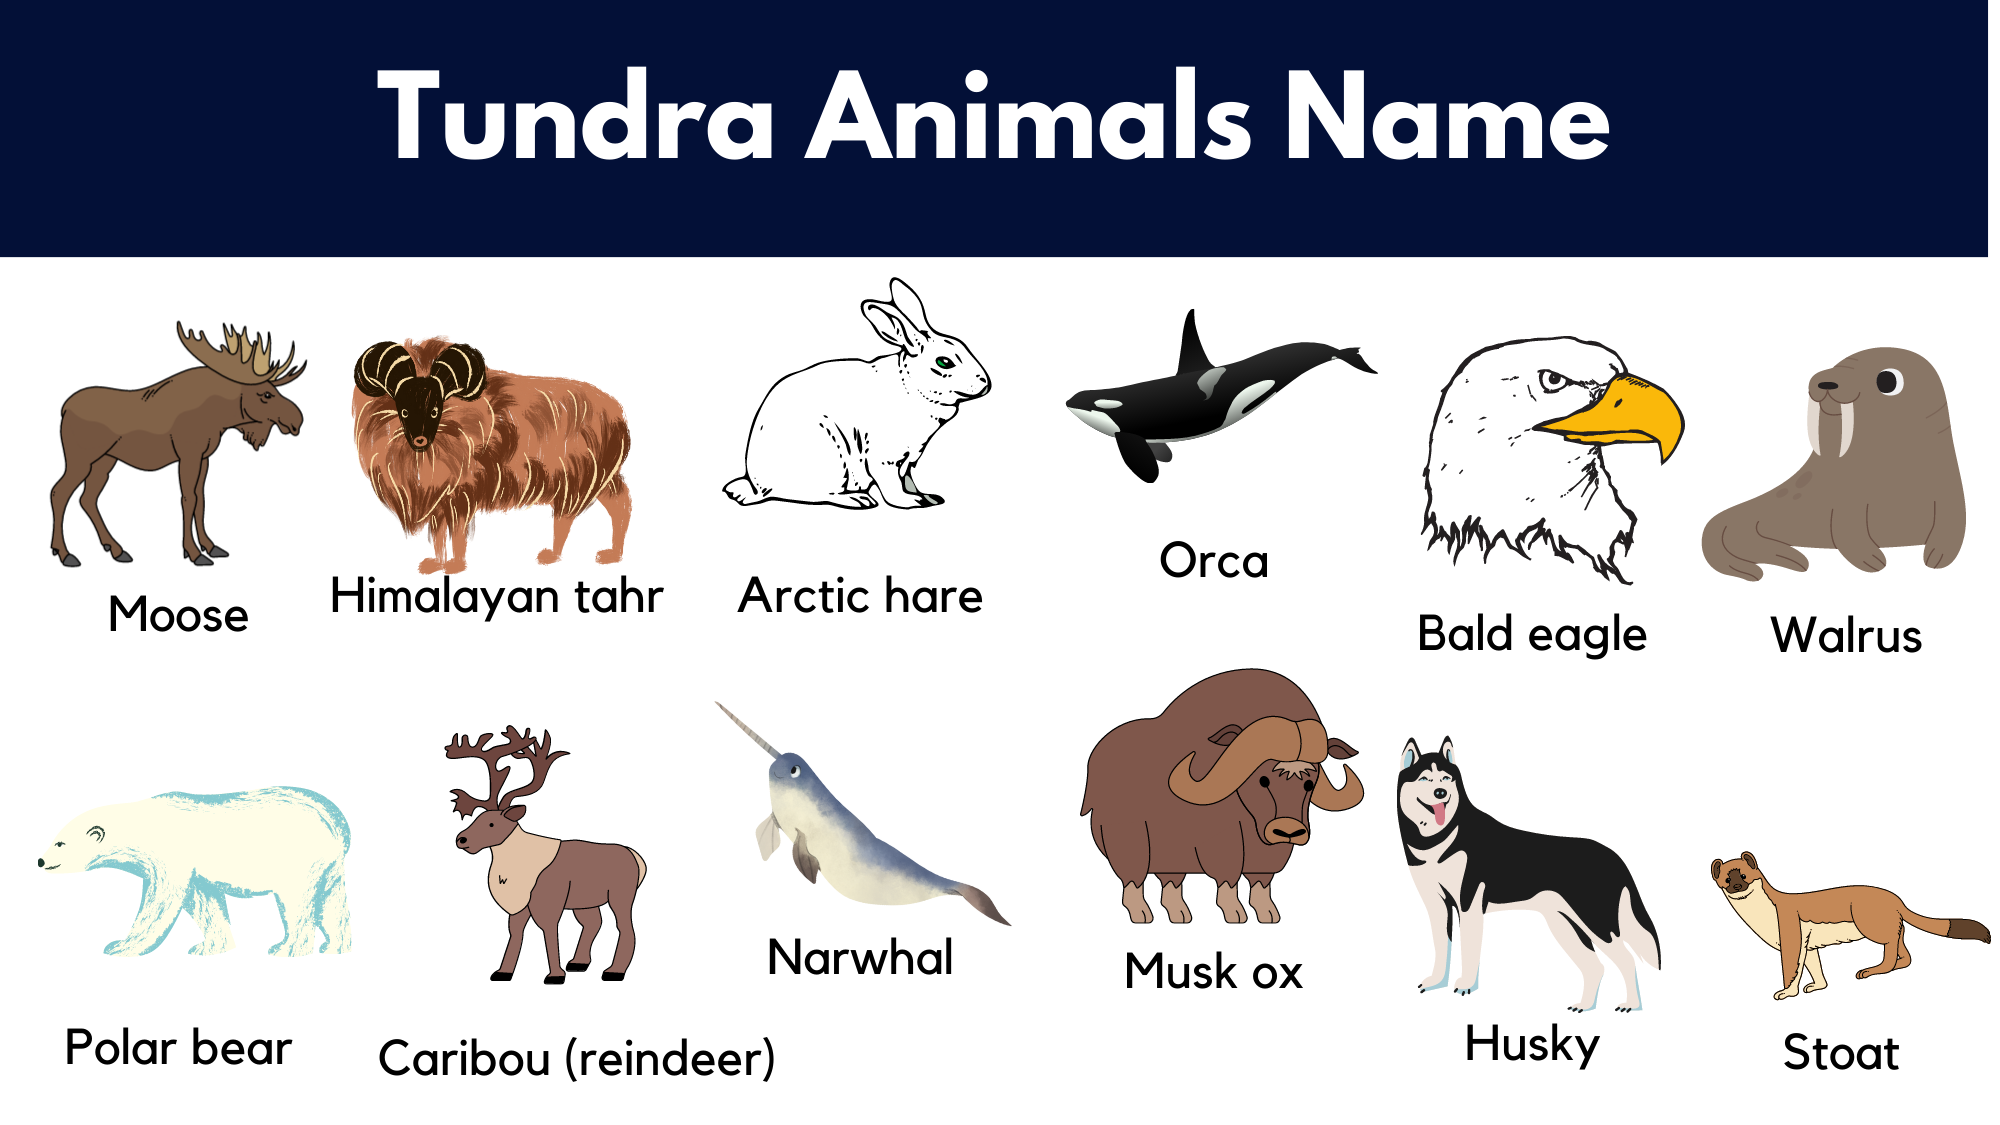 arctic tundra animals list